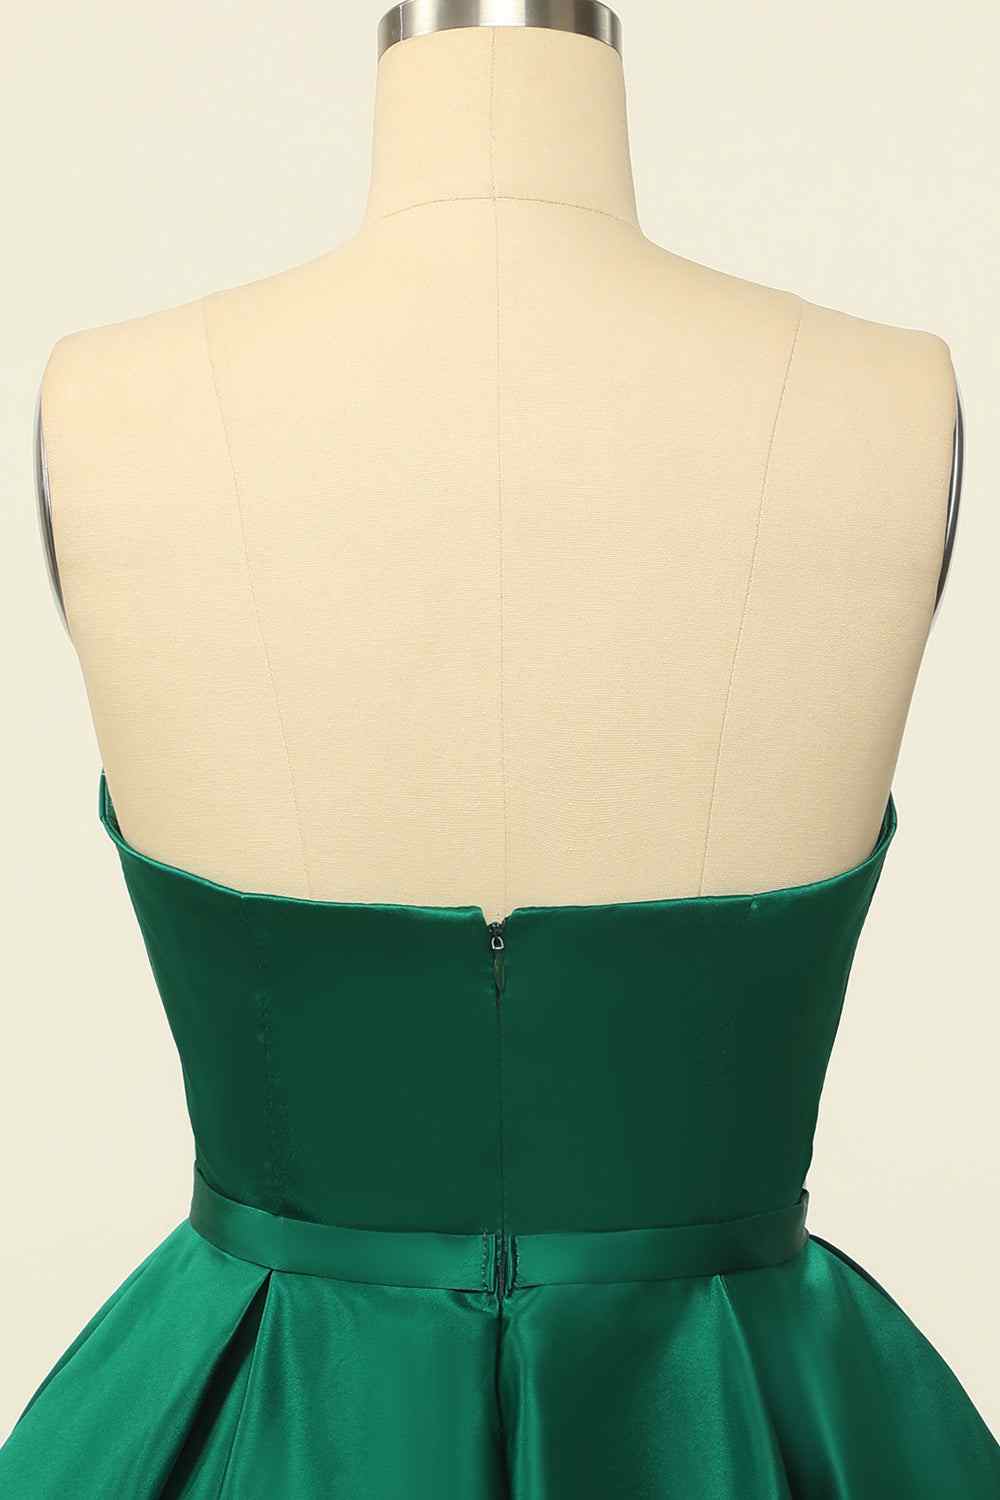 Hunter Green A-line Strapless Satin Mini Homecoming Dress with Beaded Sash